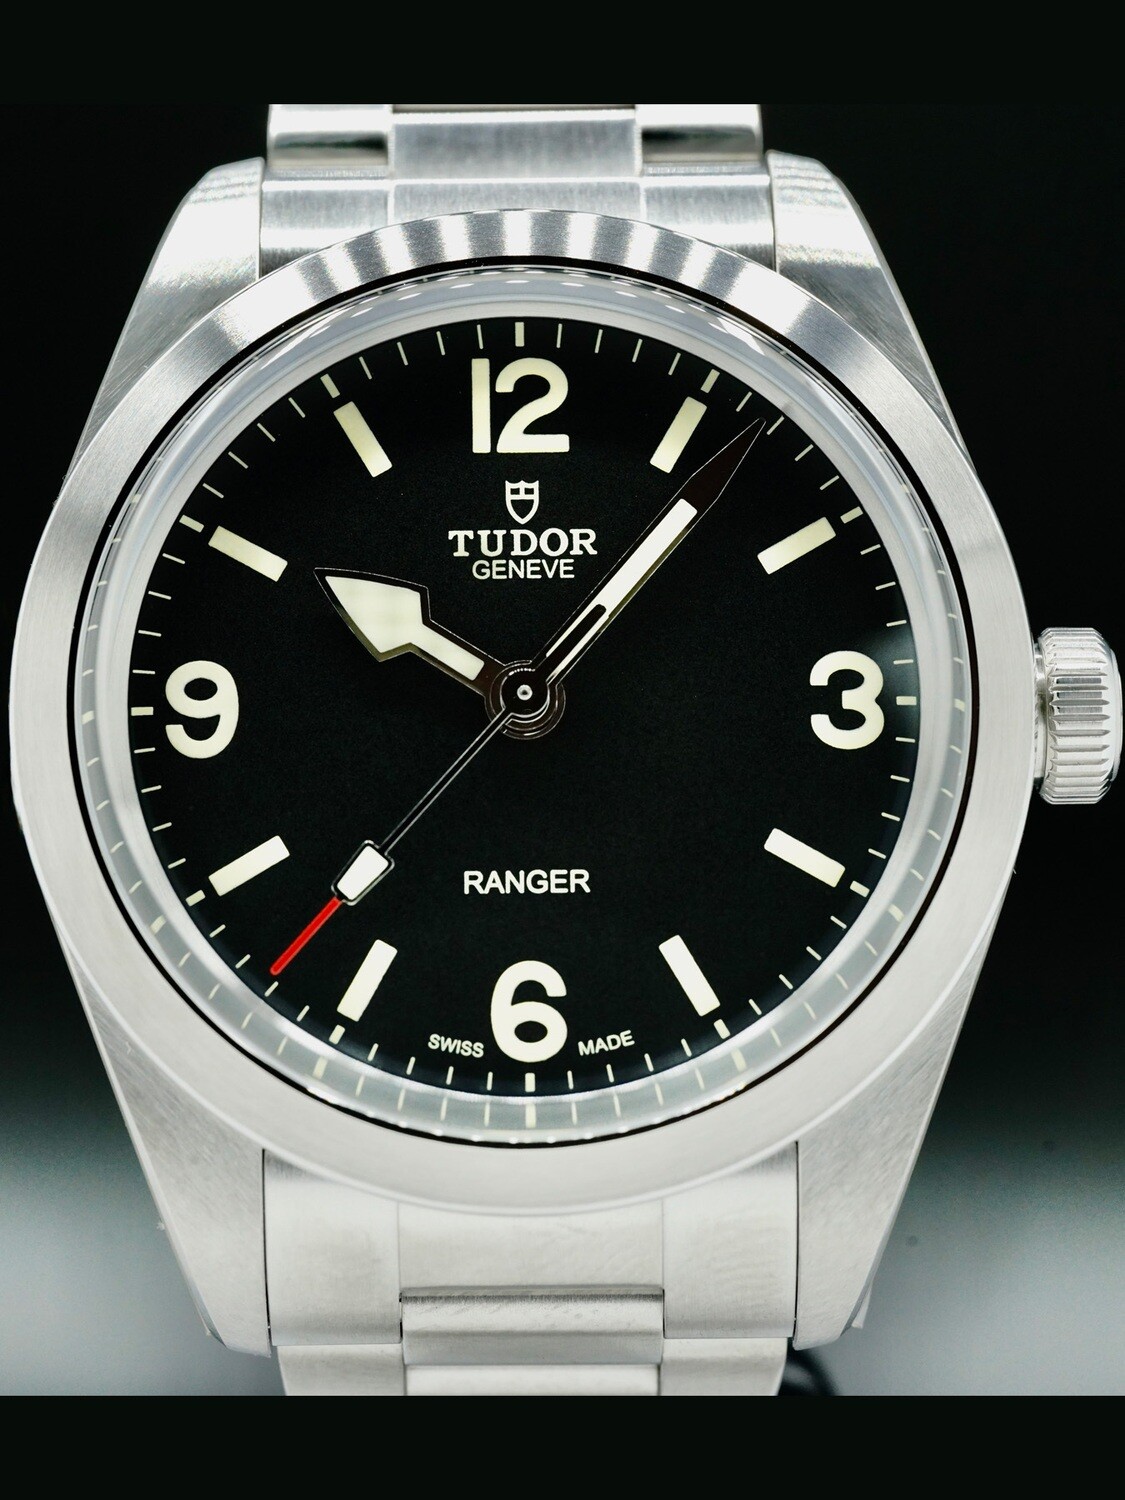 Tudor 79950 SS Ranger on Bracelet - Exquisite Timepieces